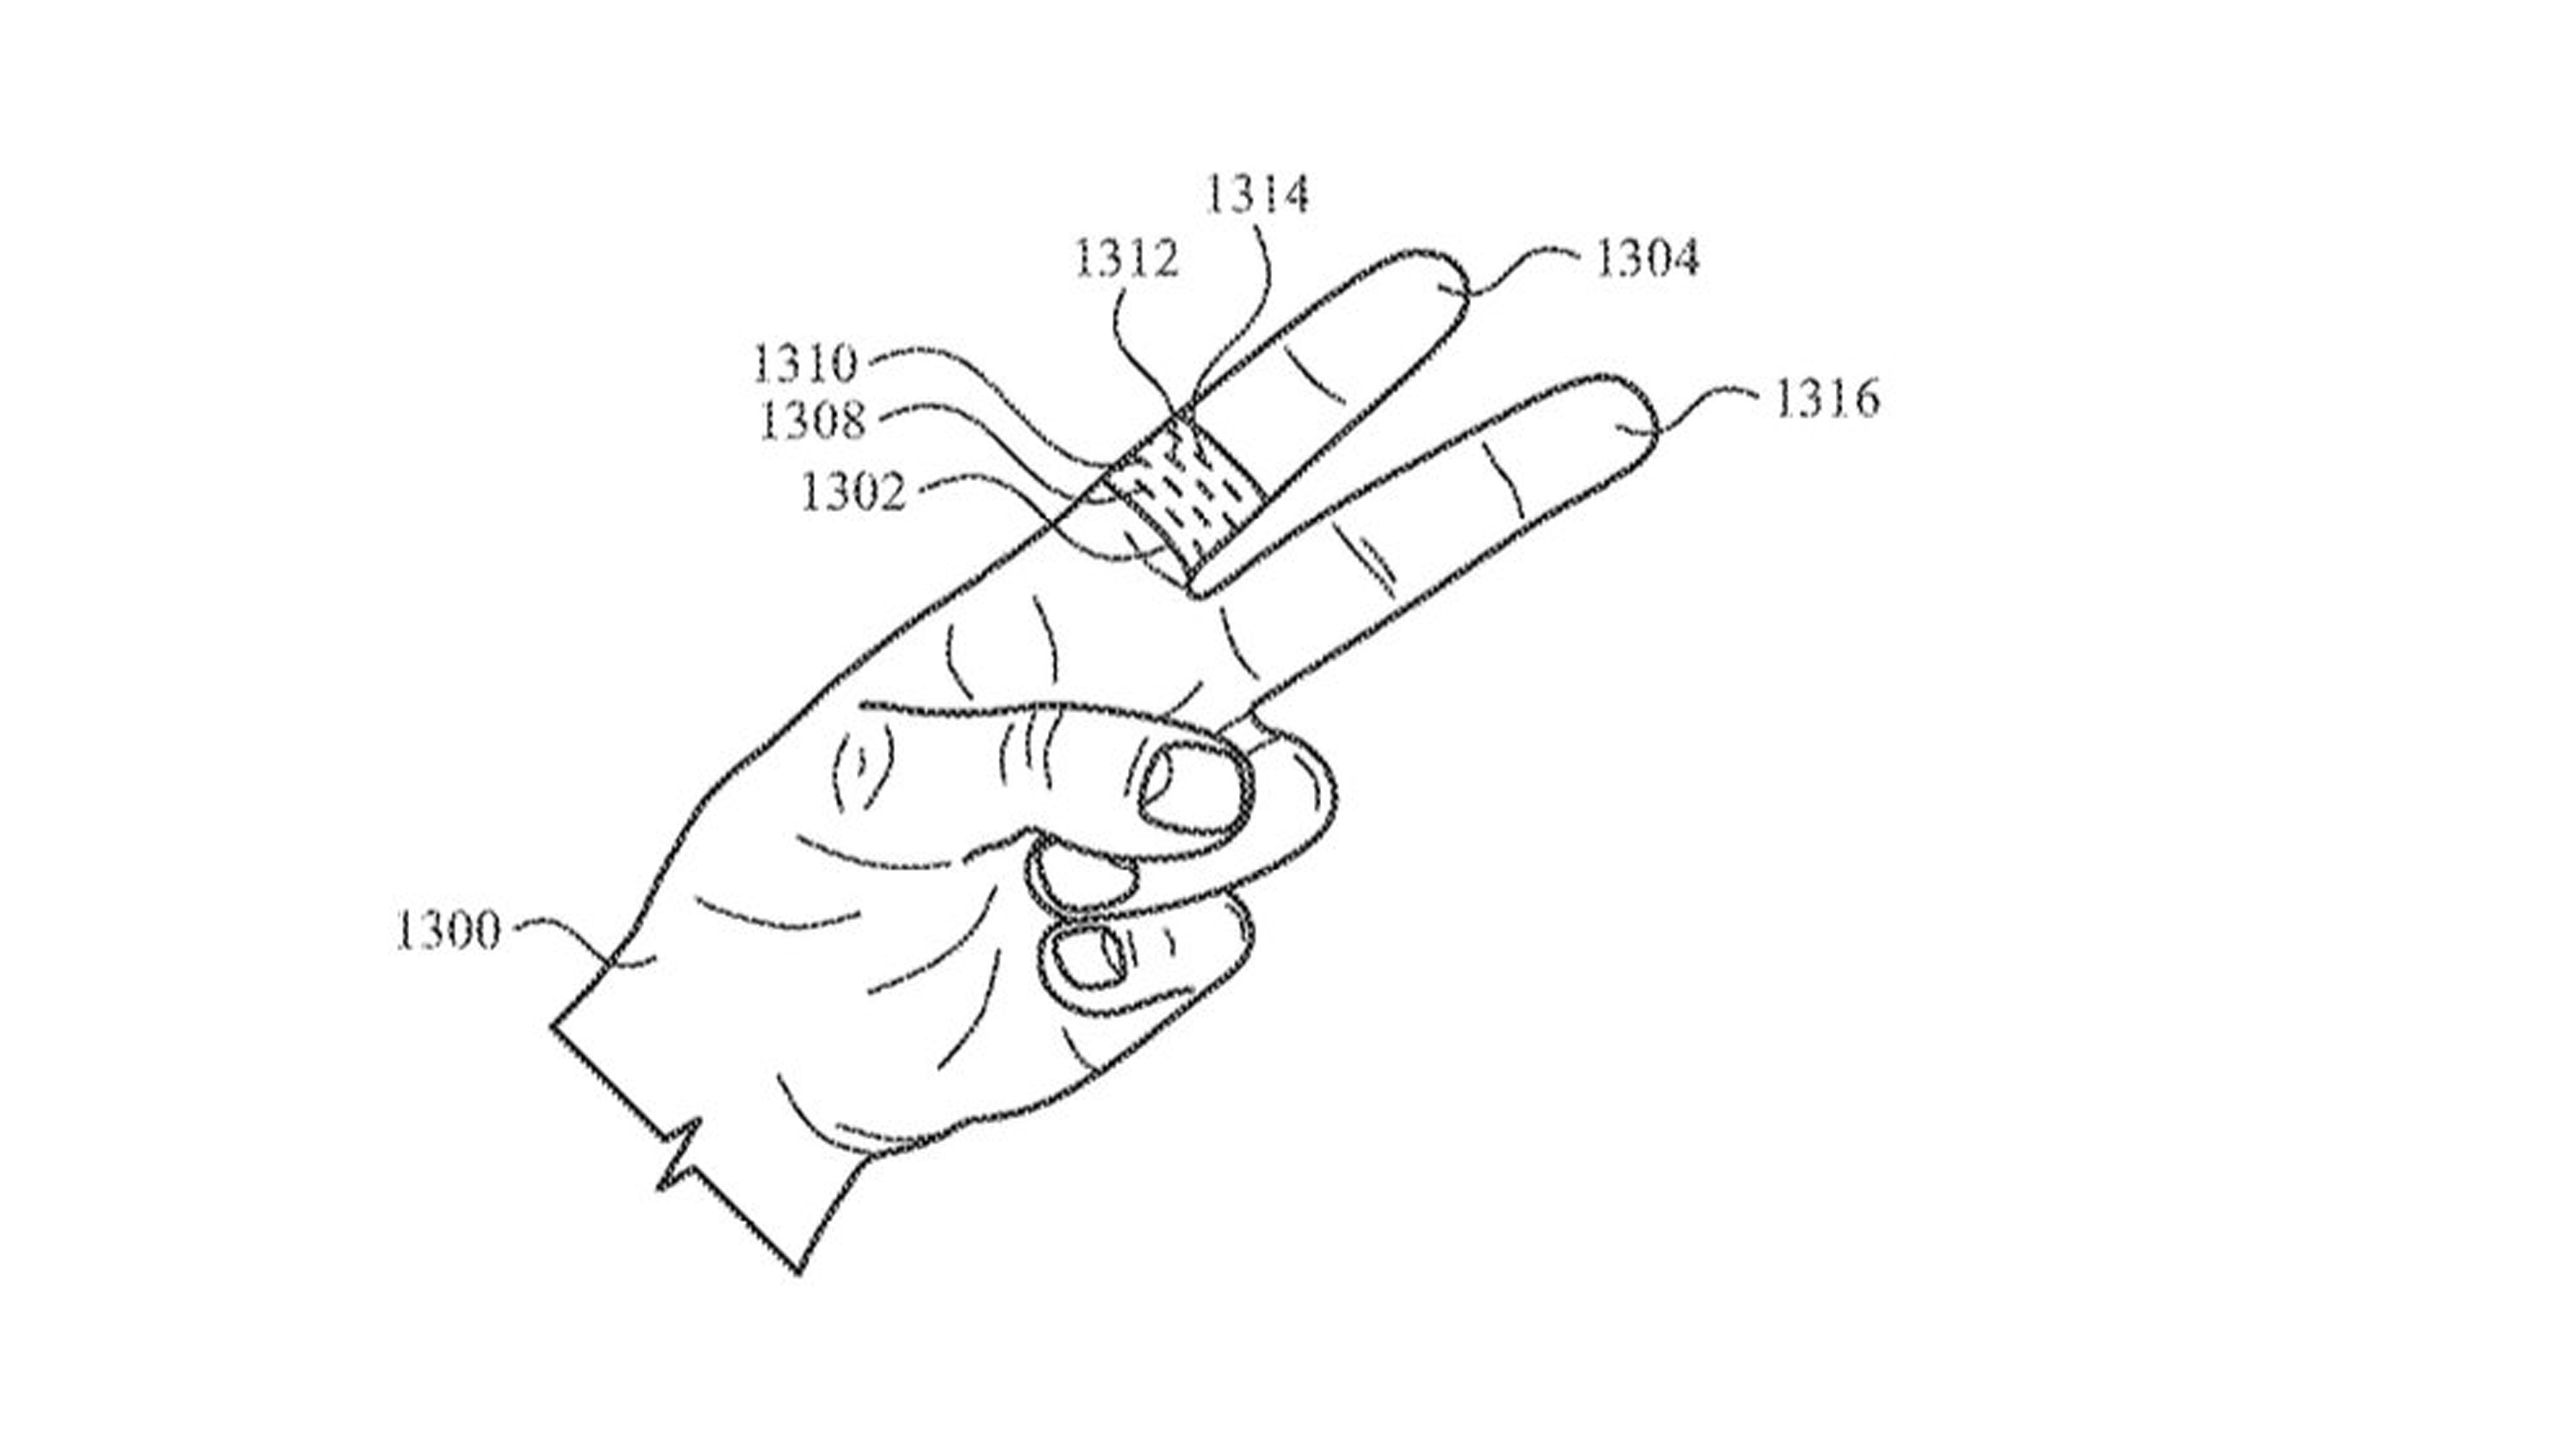 The scissors gesture in Apple's ring patent.